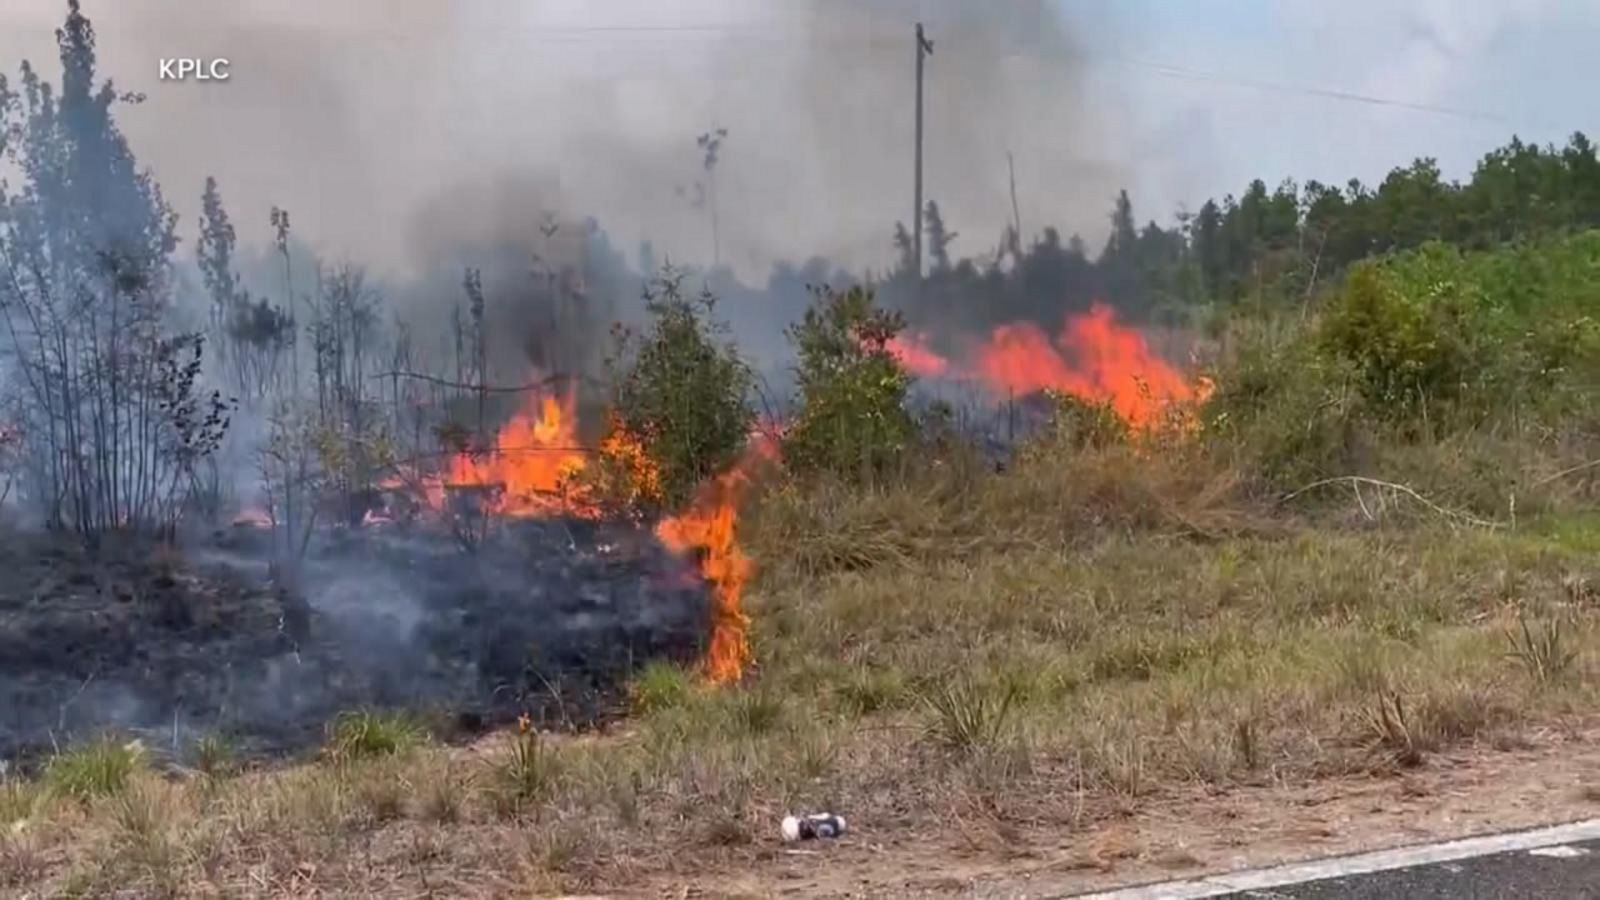 VIDEO: Mandatory evacuations as dangerous wildfires spread across Louisiana